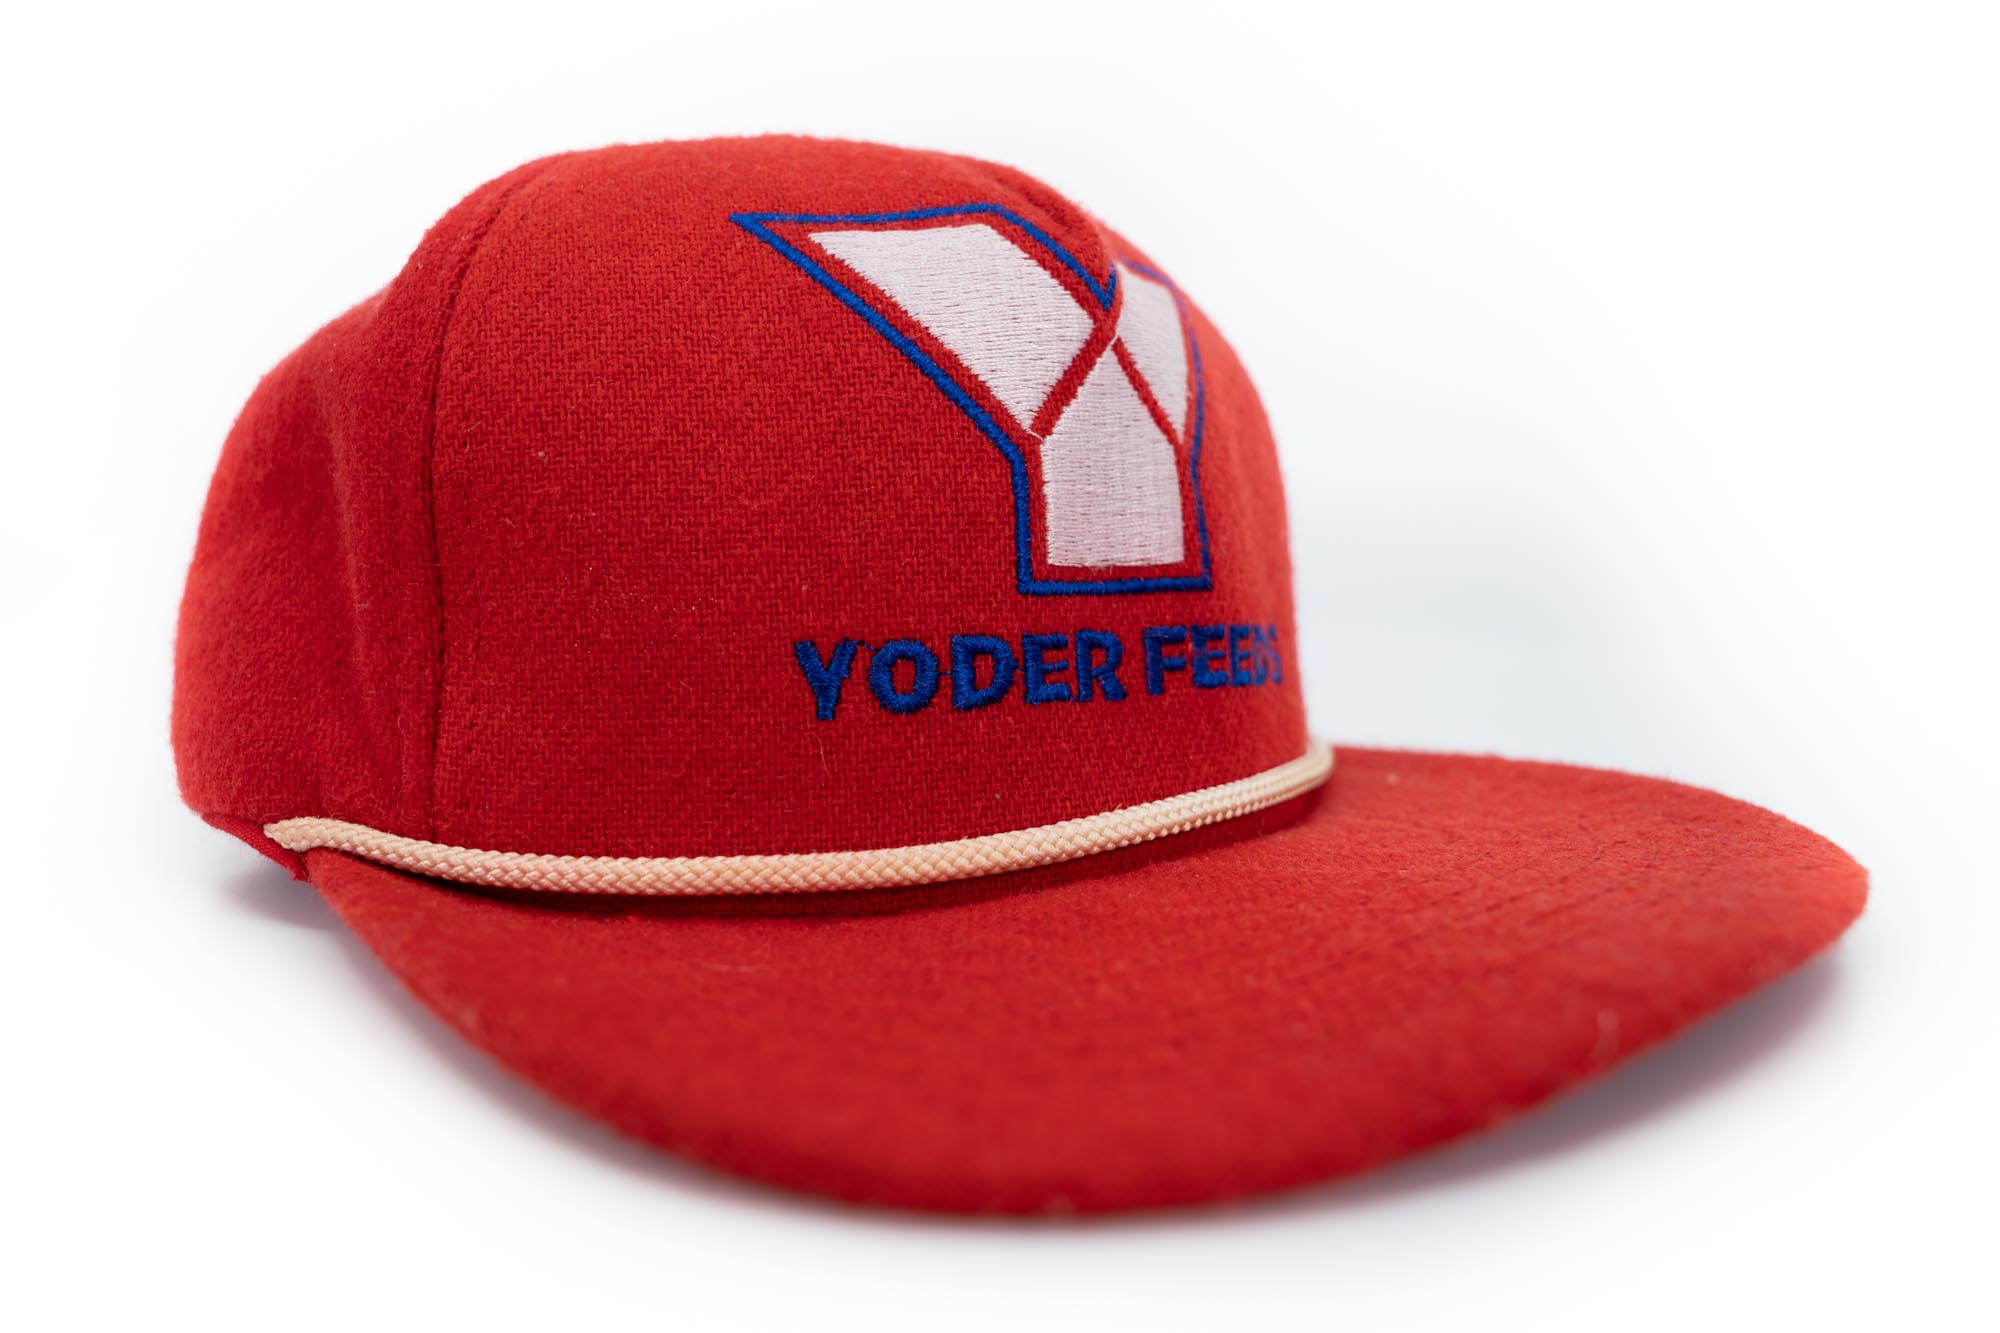 Yoder Red